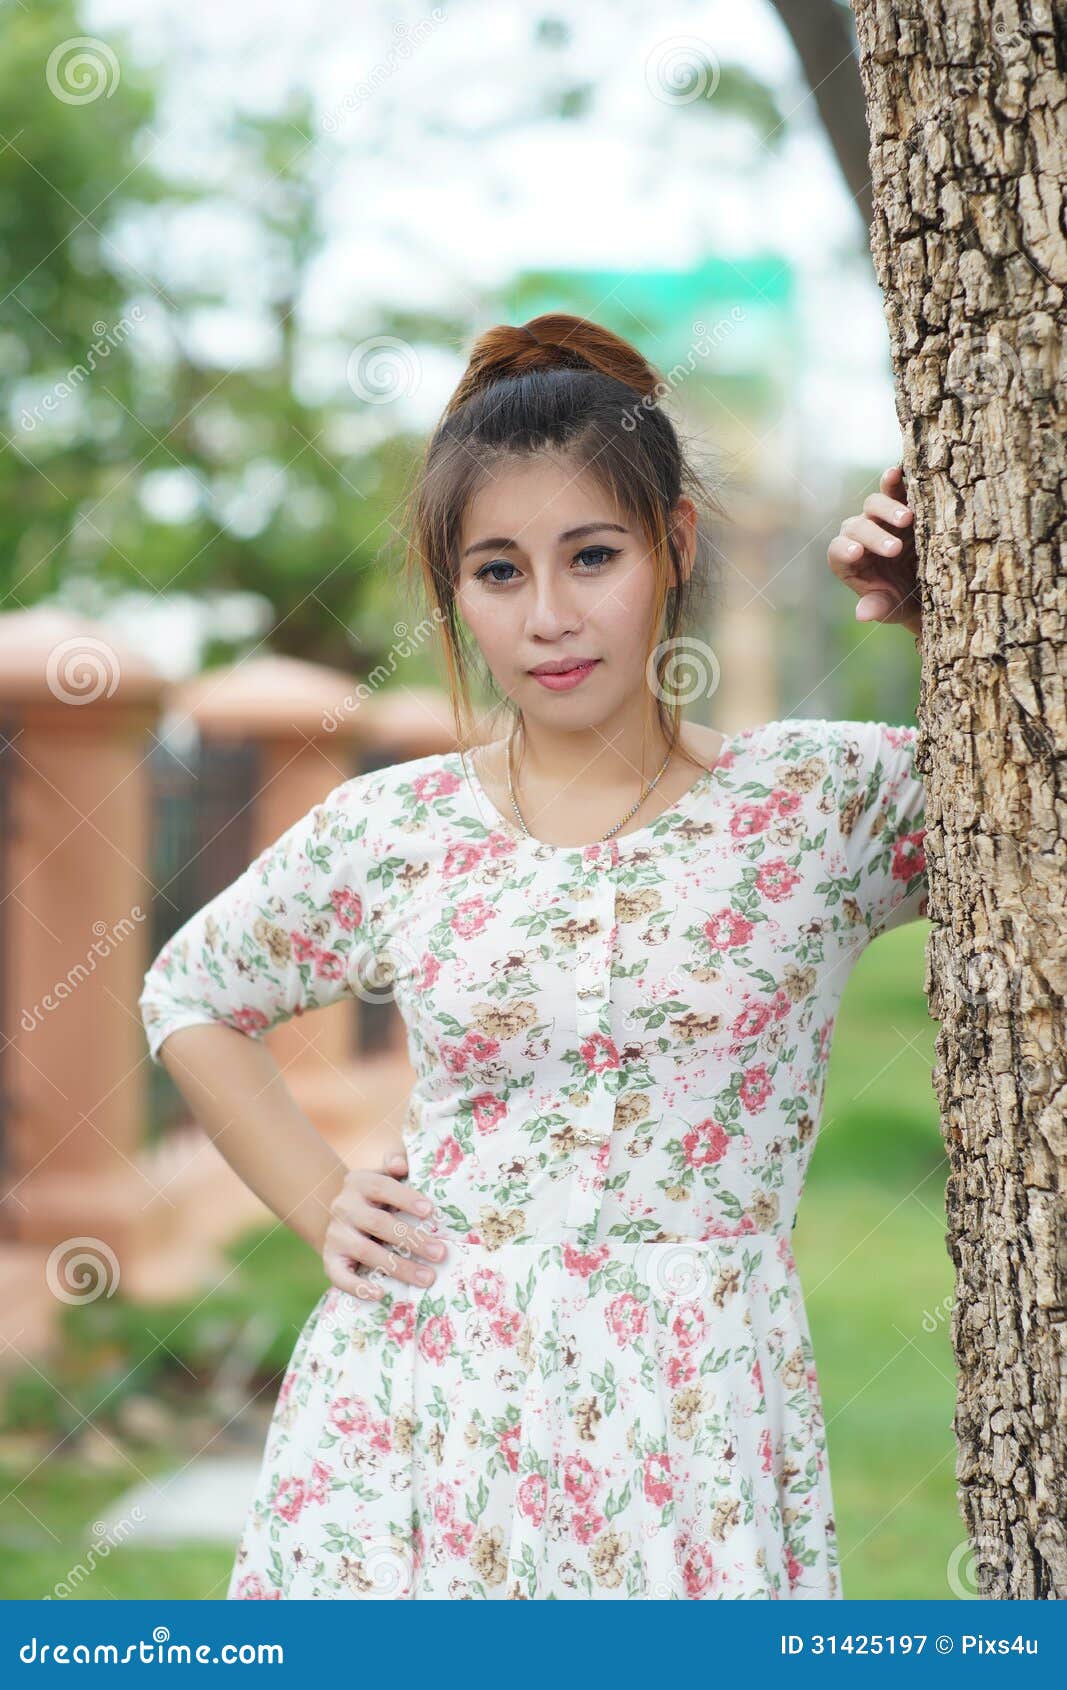 woman outdoor Chicktrainer asian